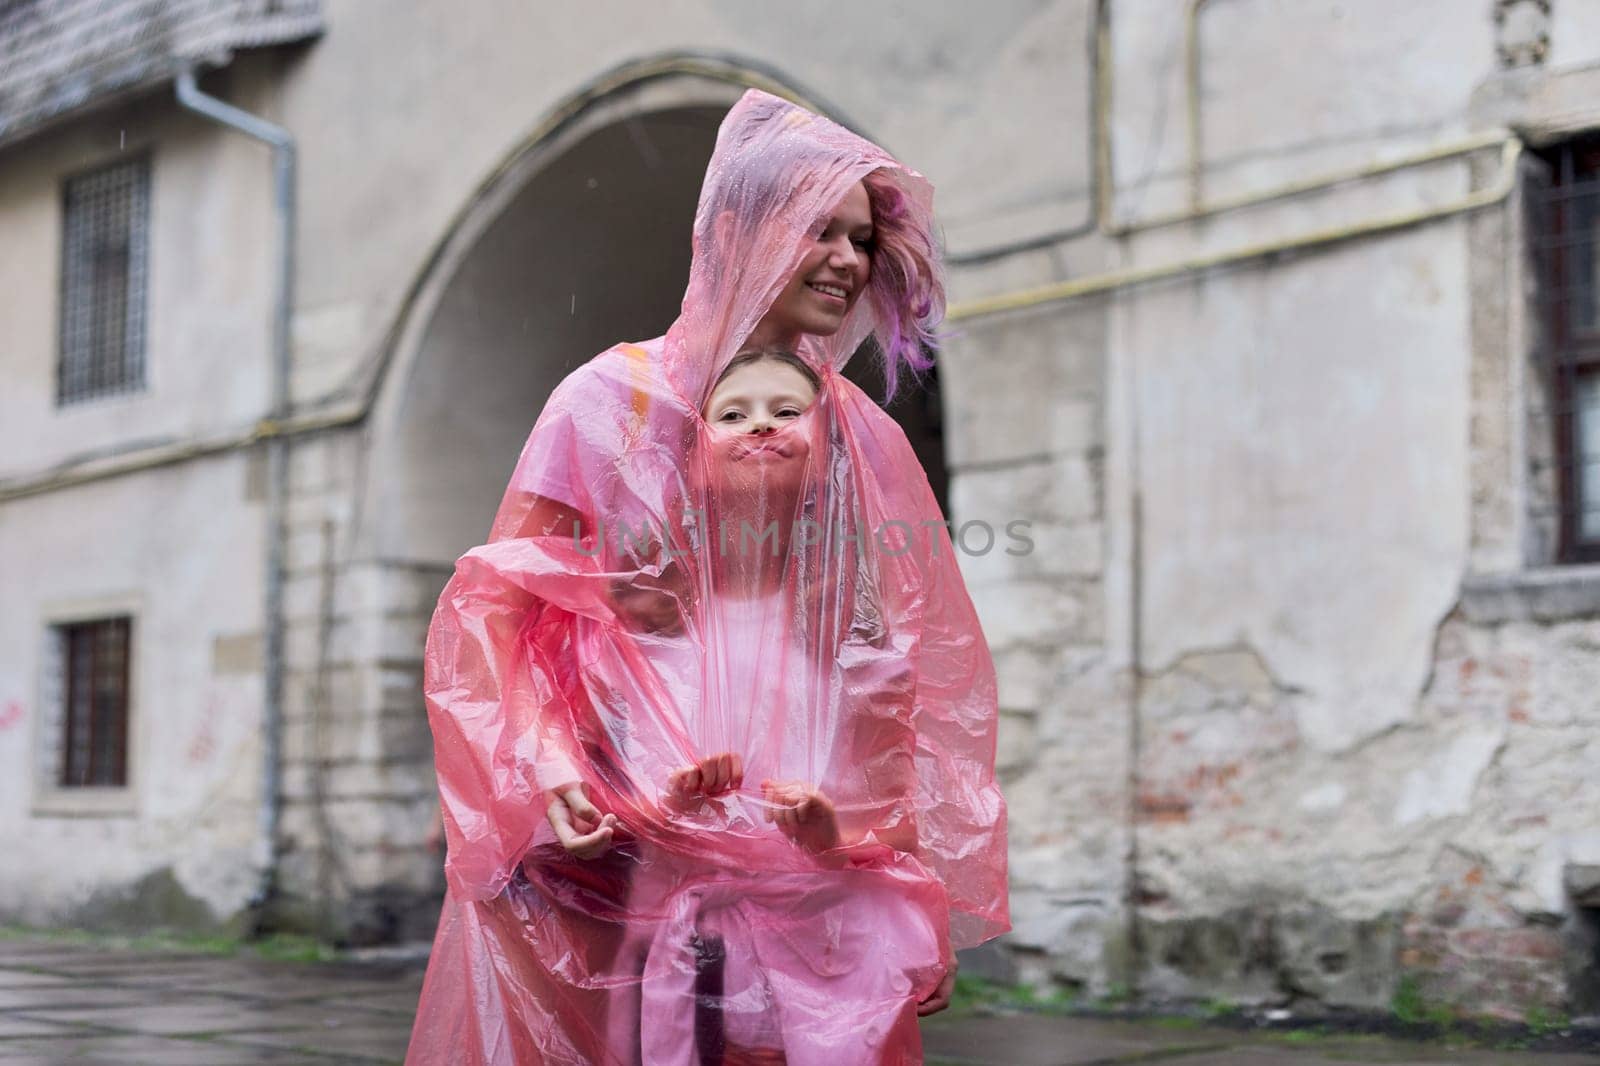 Girls children walking in the rain dressed in a raincoat by VH-studio